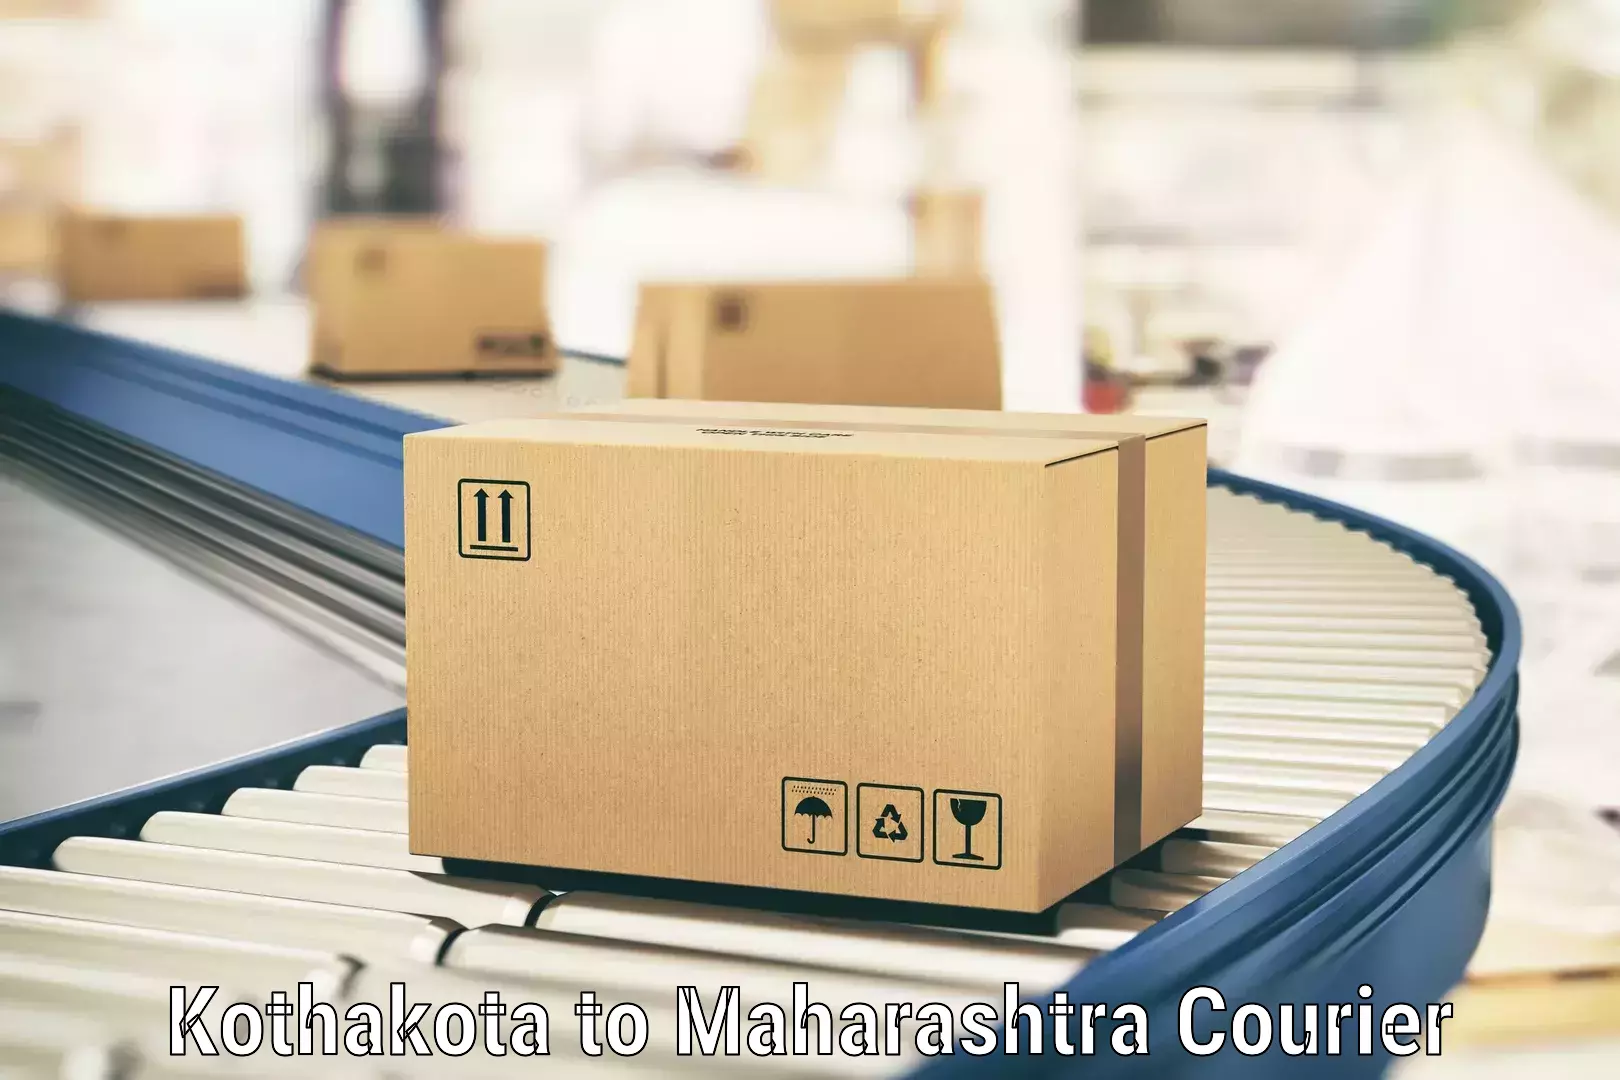 Same-day delivery options Kothakota to Maharashtra